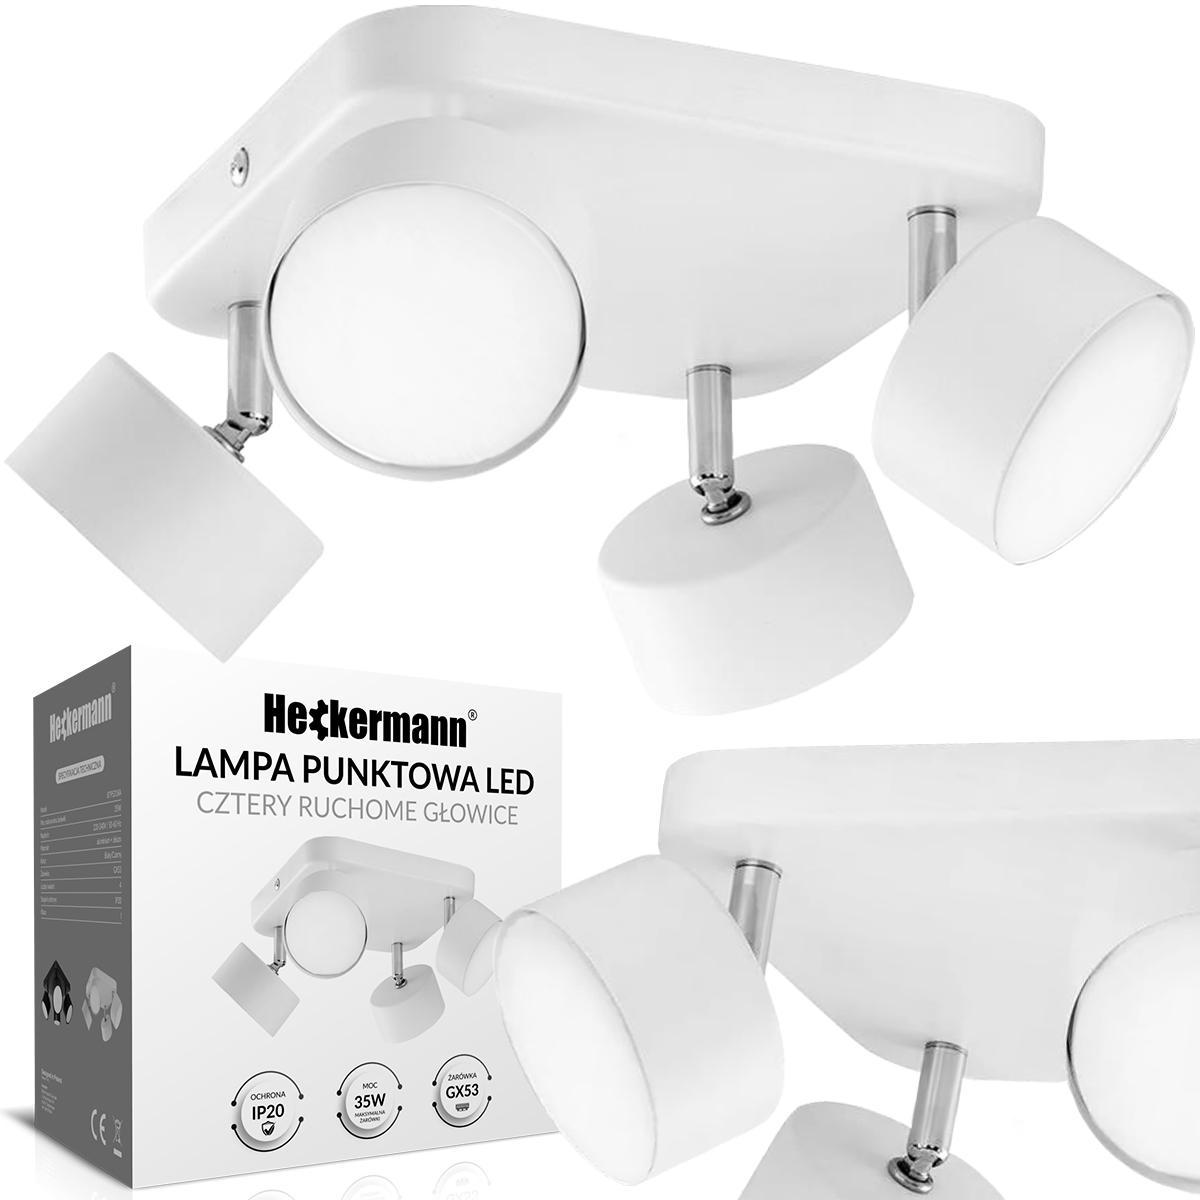 Lampa sufitowa punktowa LED Heckermann 8795318A Biała 4x głowica 0 Full Screen